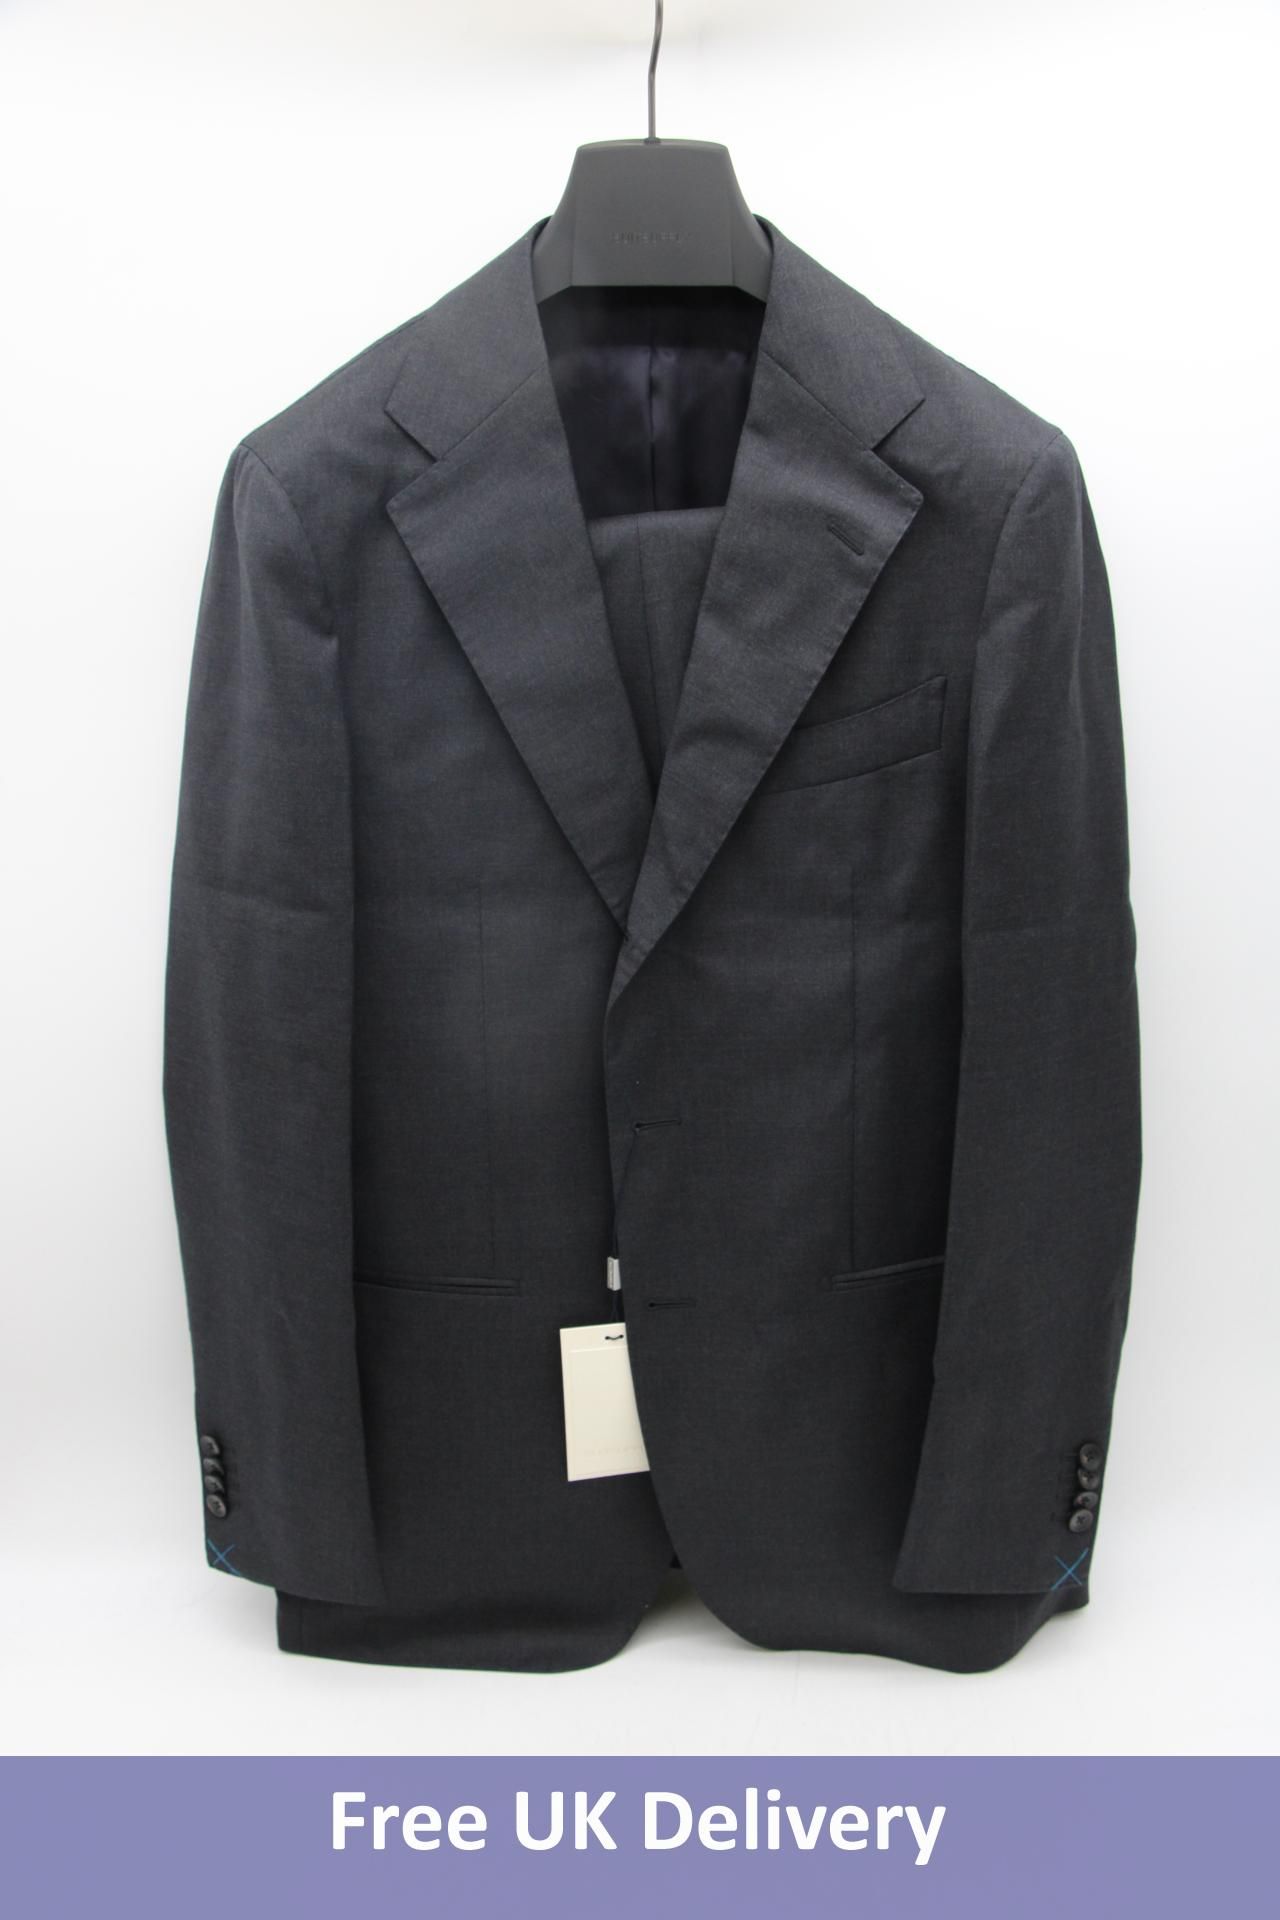 Suitsupply Perennial Havana Suit, Dark Grey, UK 40